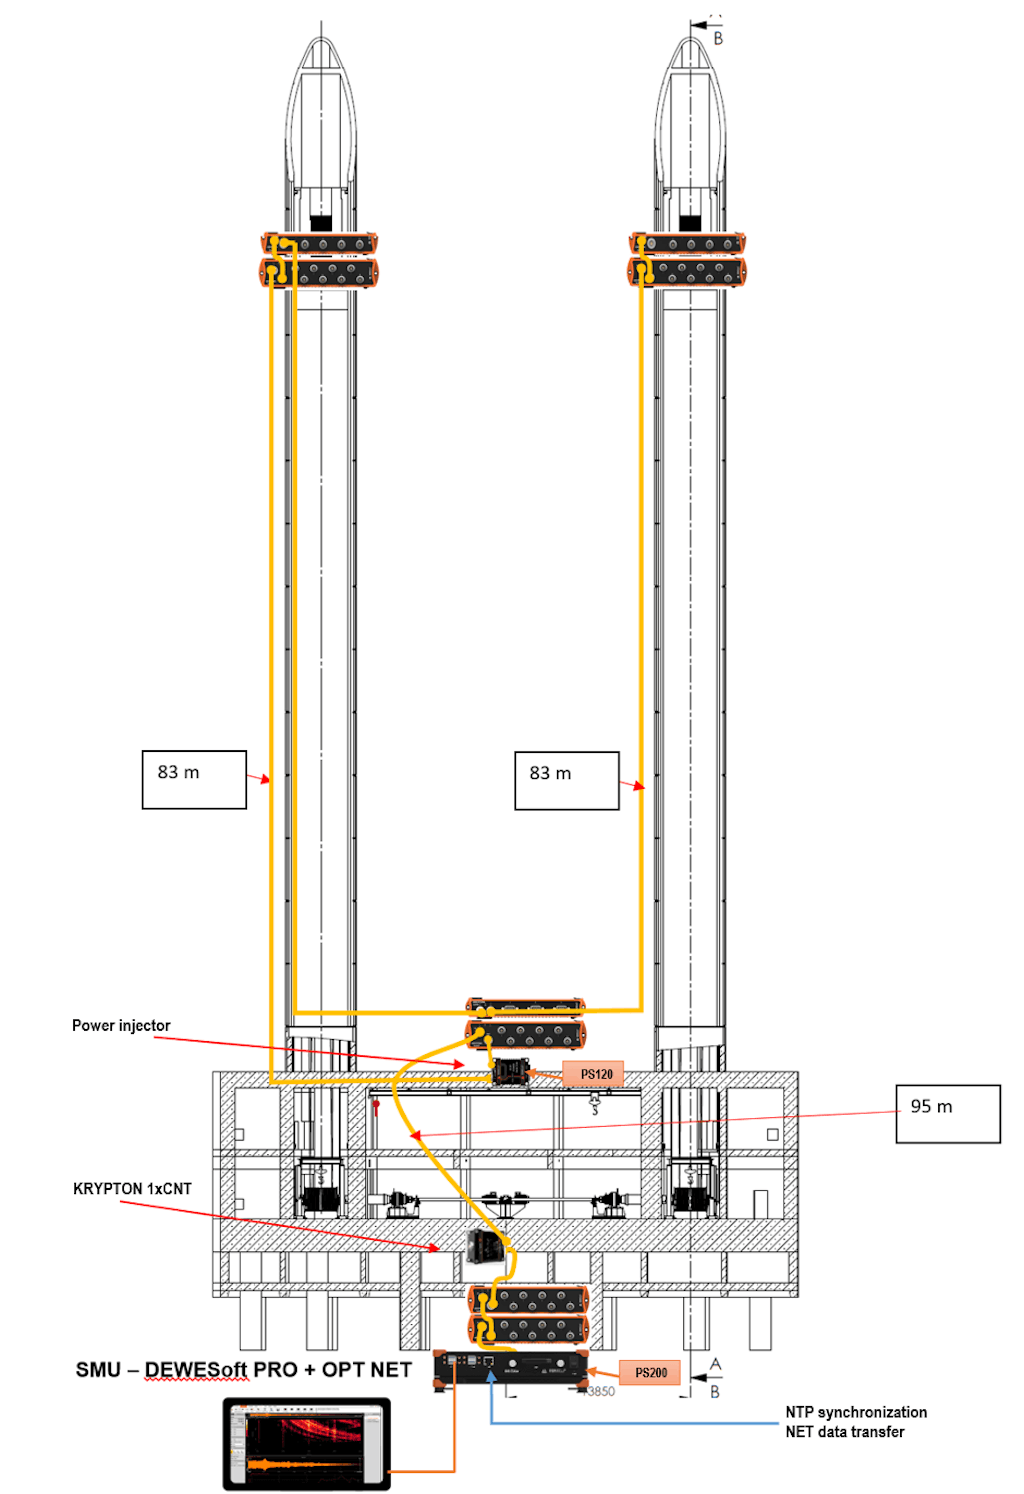 Overall measurement instrumentation setup on pylons and bridge structure